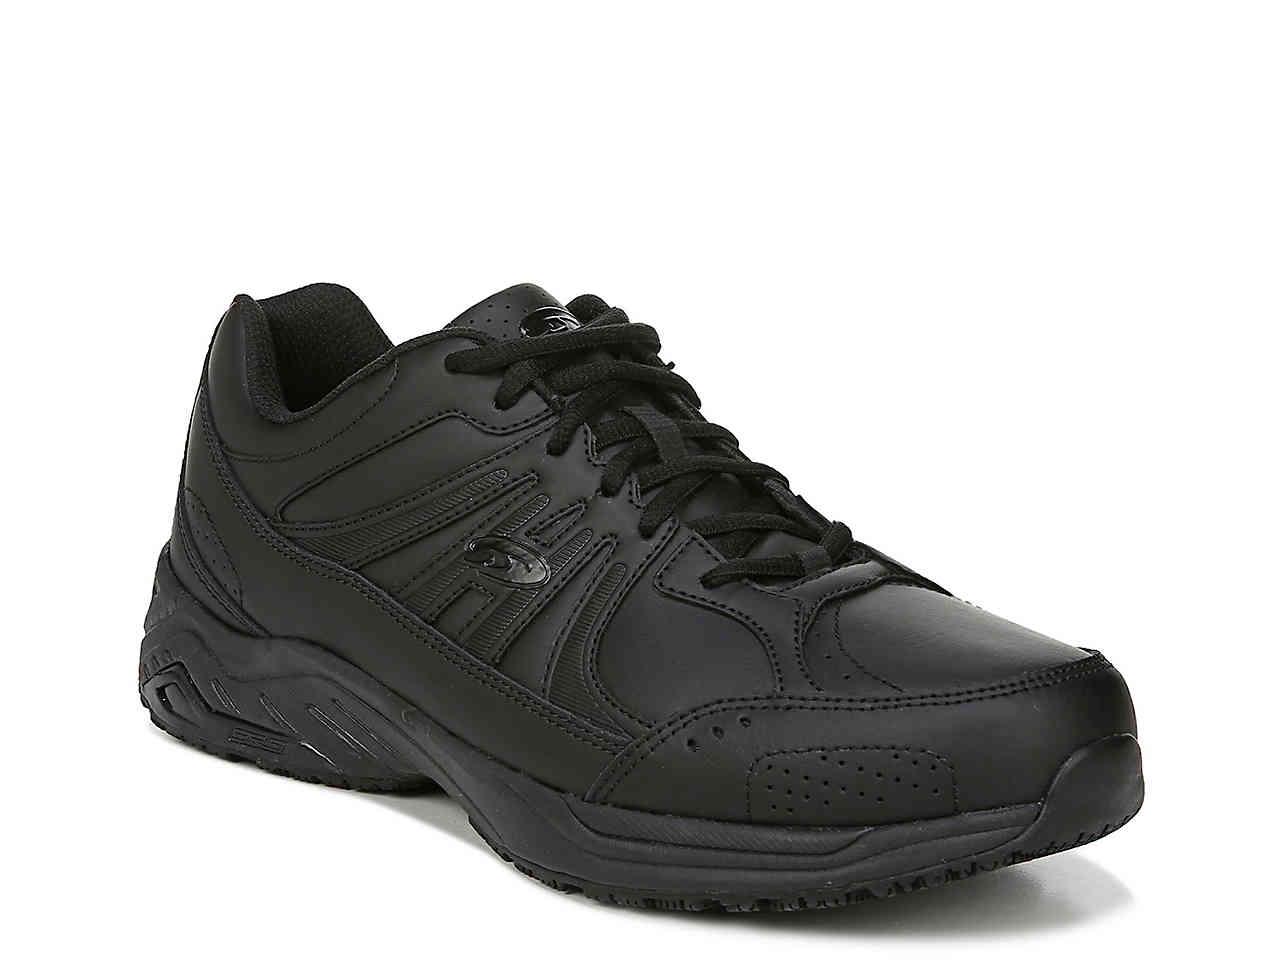 Dr. Scholls Leather Titan 2 Work Shoe in Black for Men - Lyst